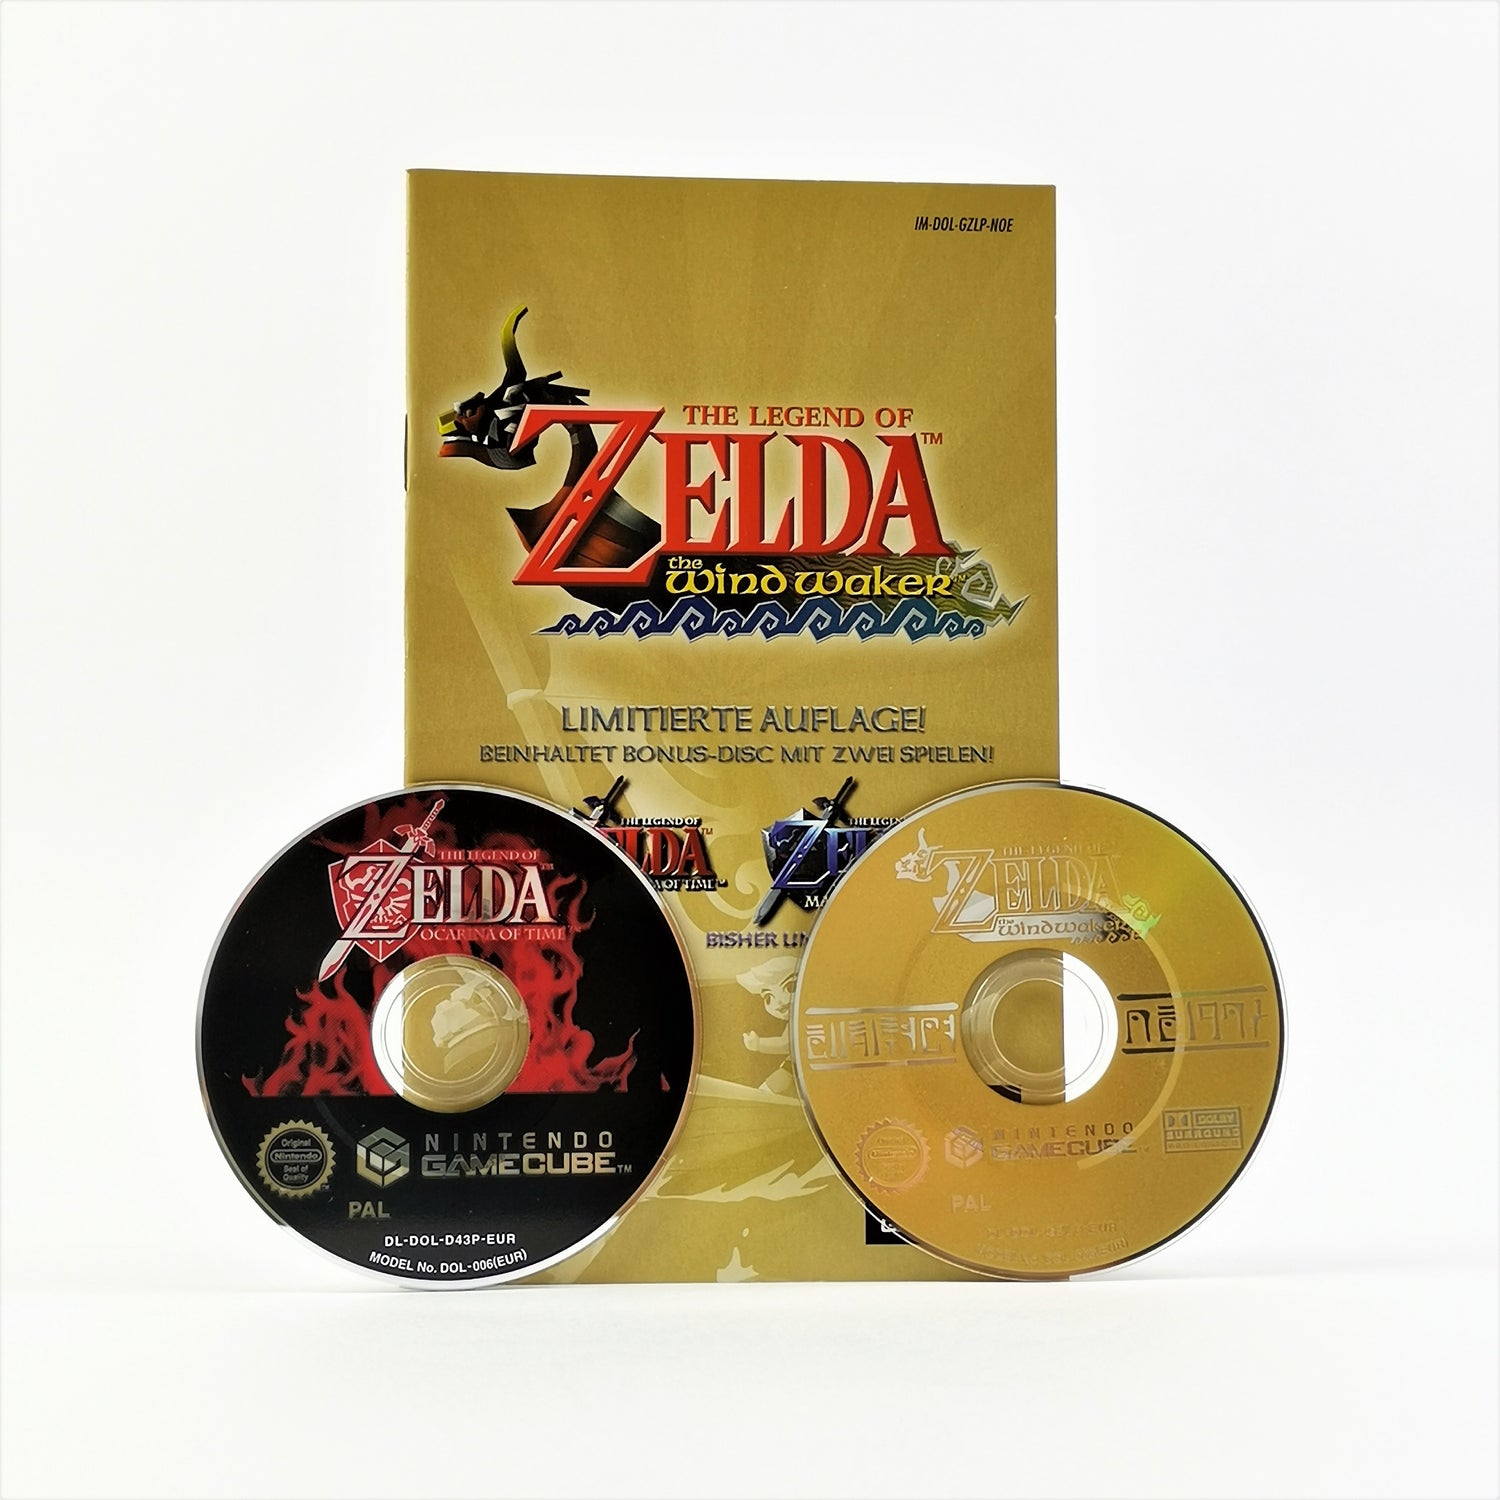 Nintendo Gamecube Game: Zelda The Windwaker Limited Edition - Without OVP PAL